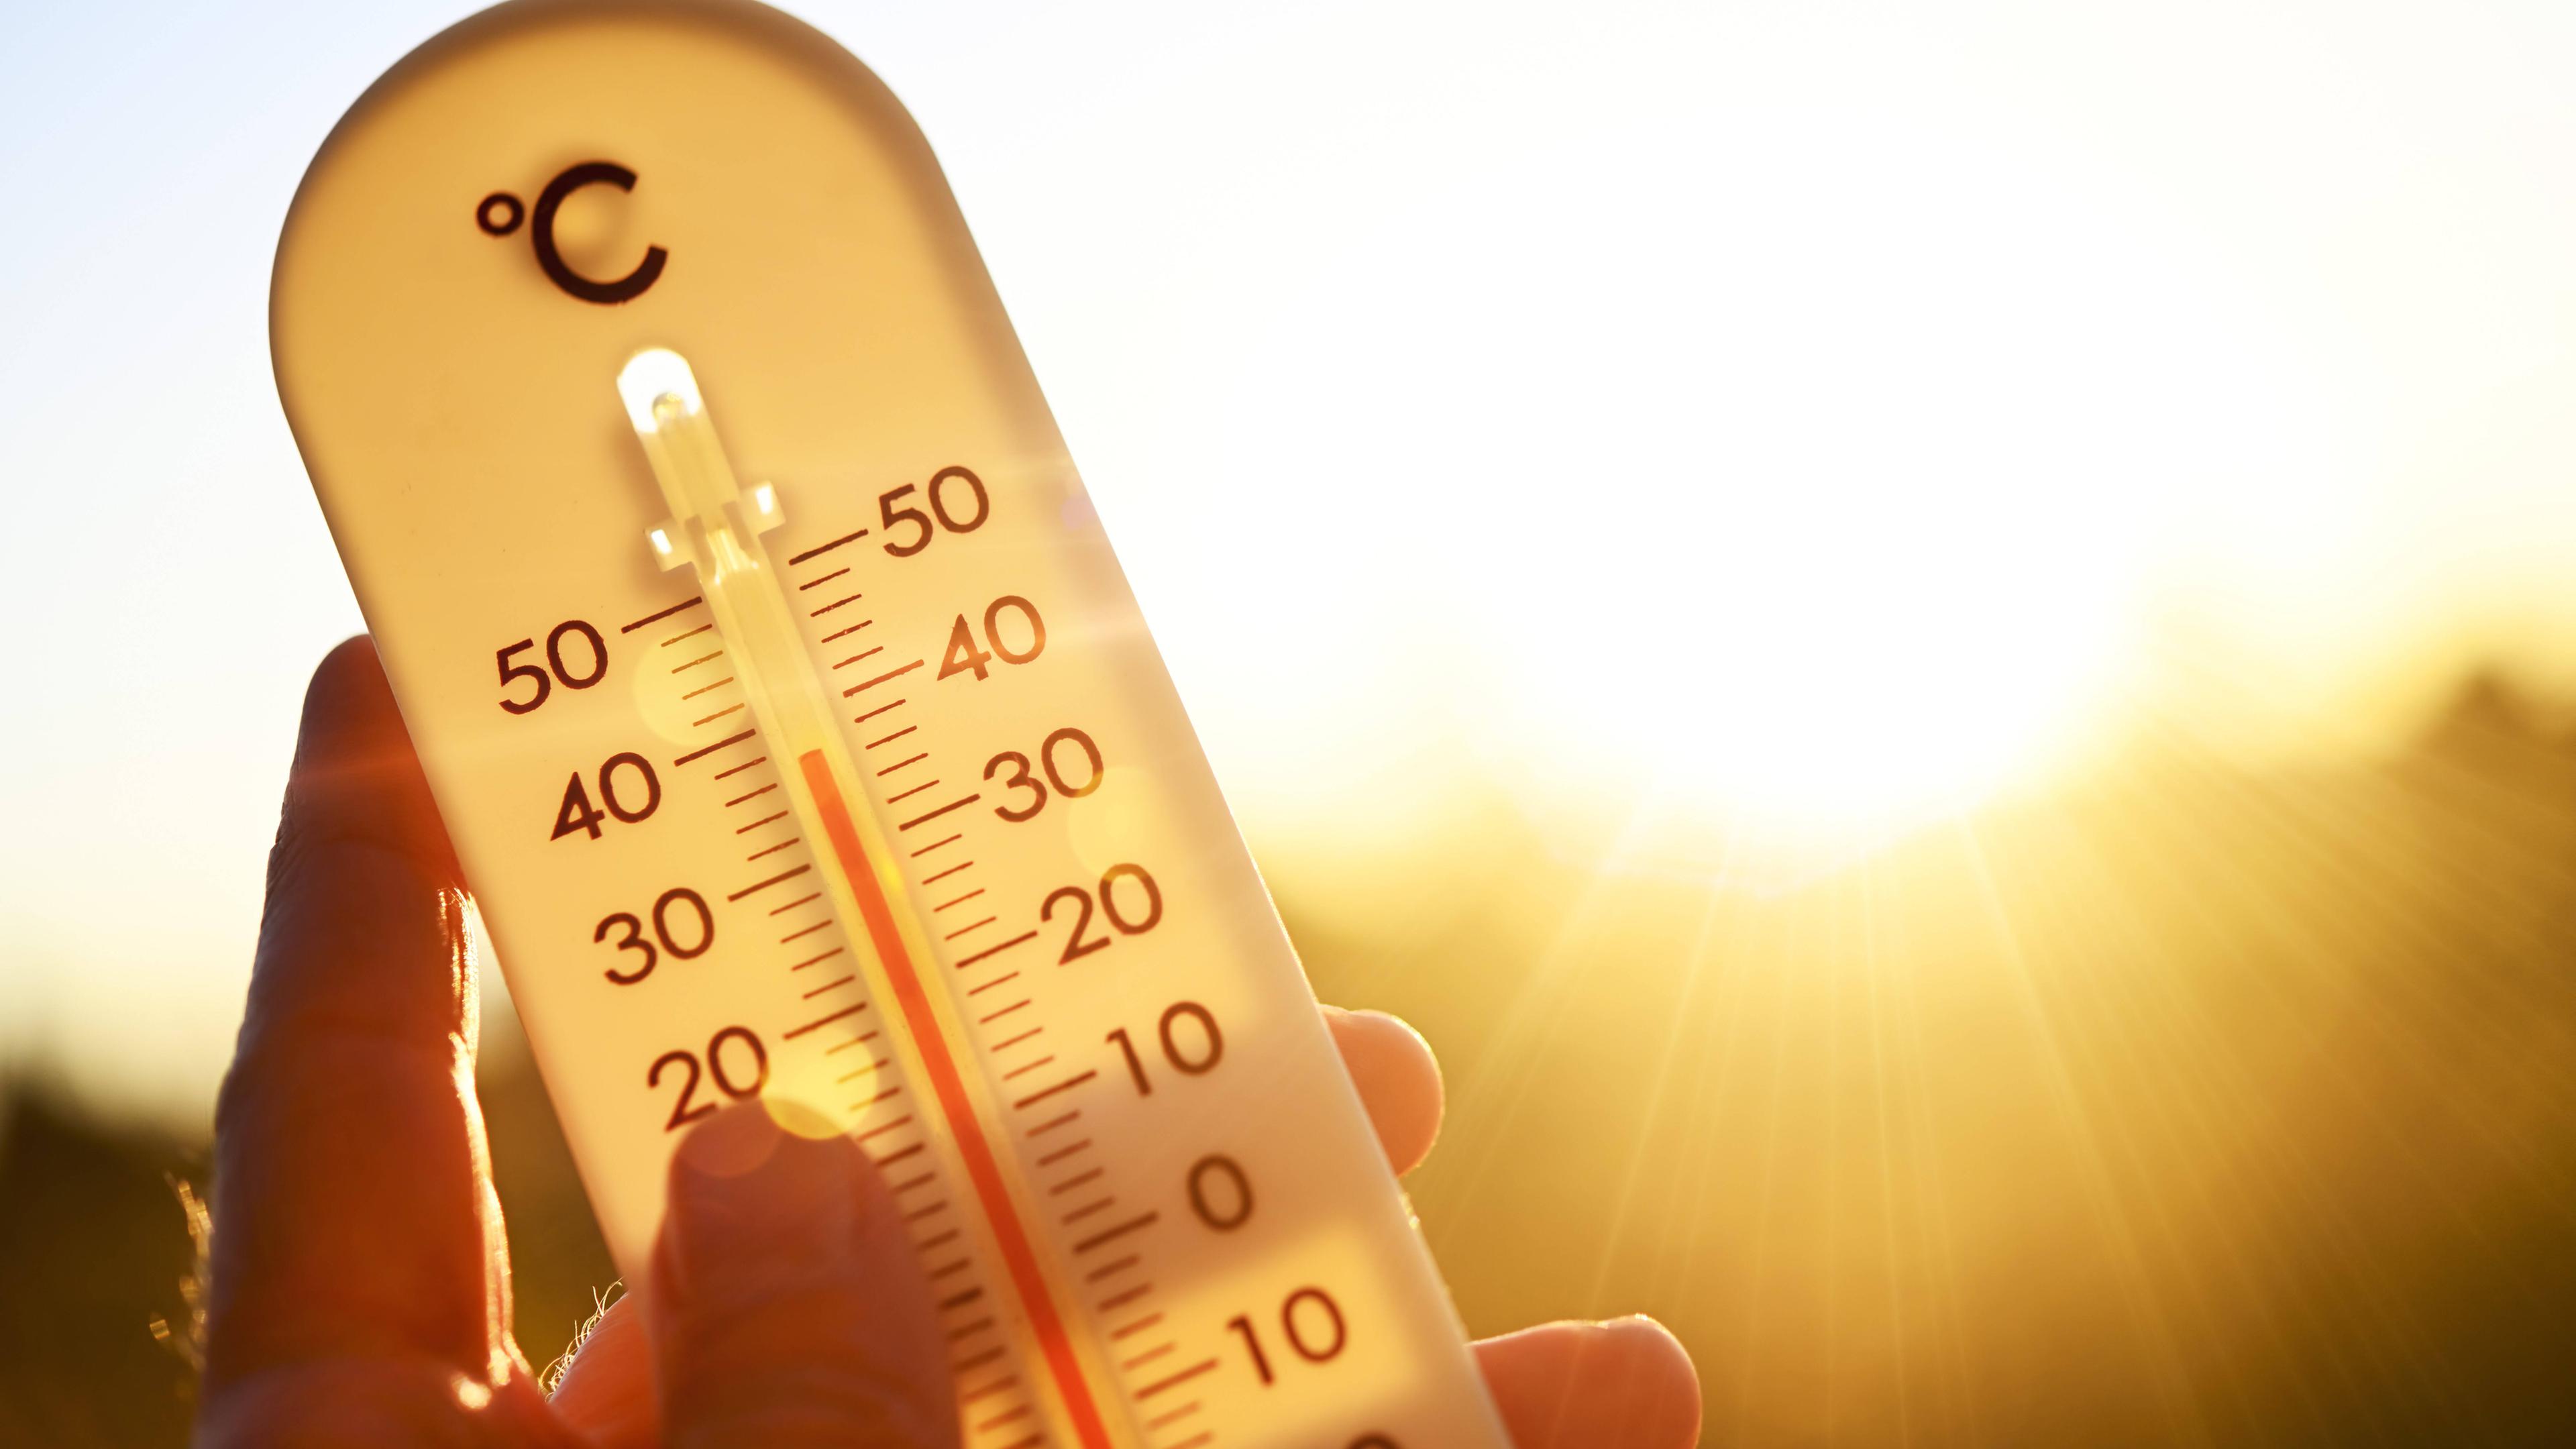 Symbolfoto: Hand hält Thermometer bei über 30 Grad Celsius 